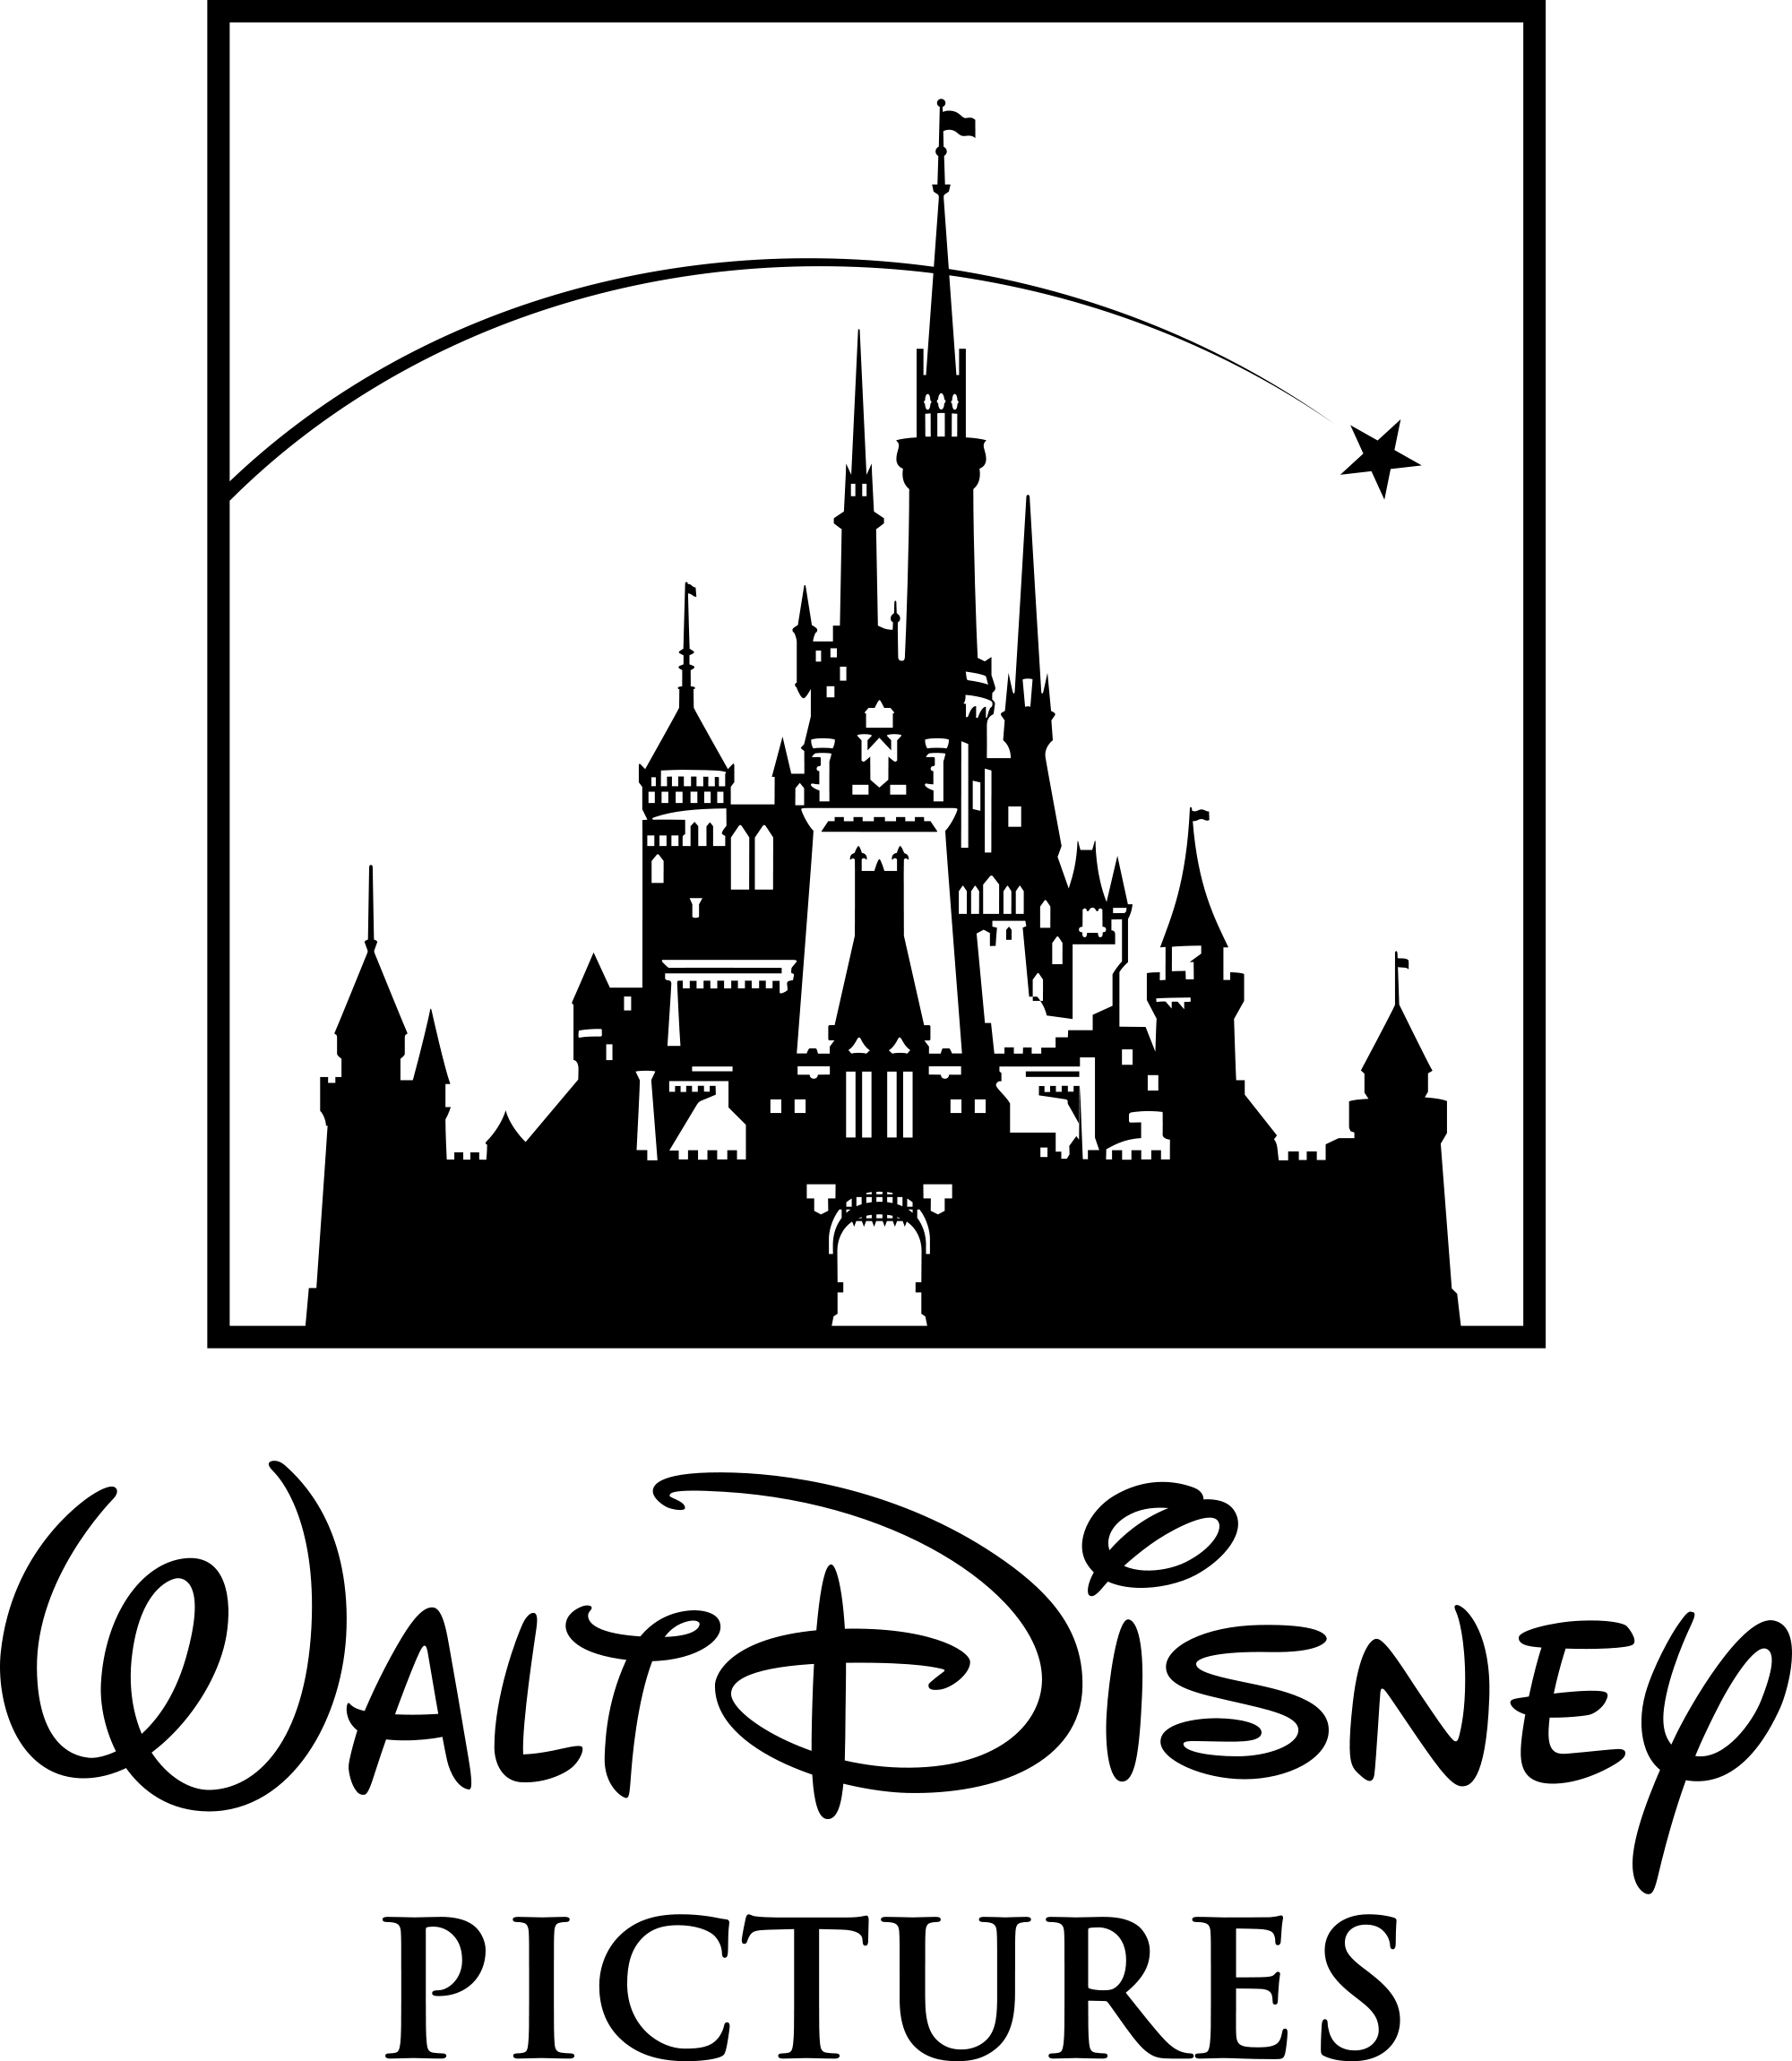 Old Walt Disney Logo - The walt disney's movie castle history